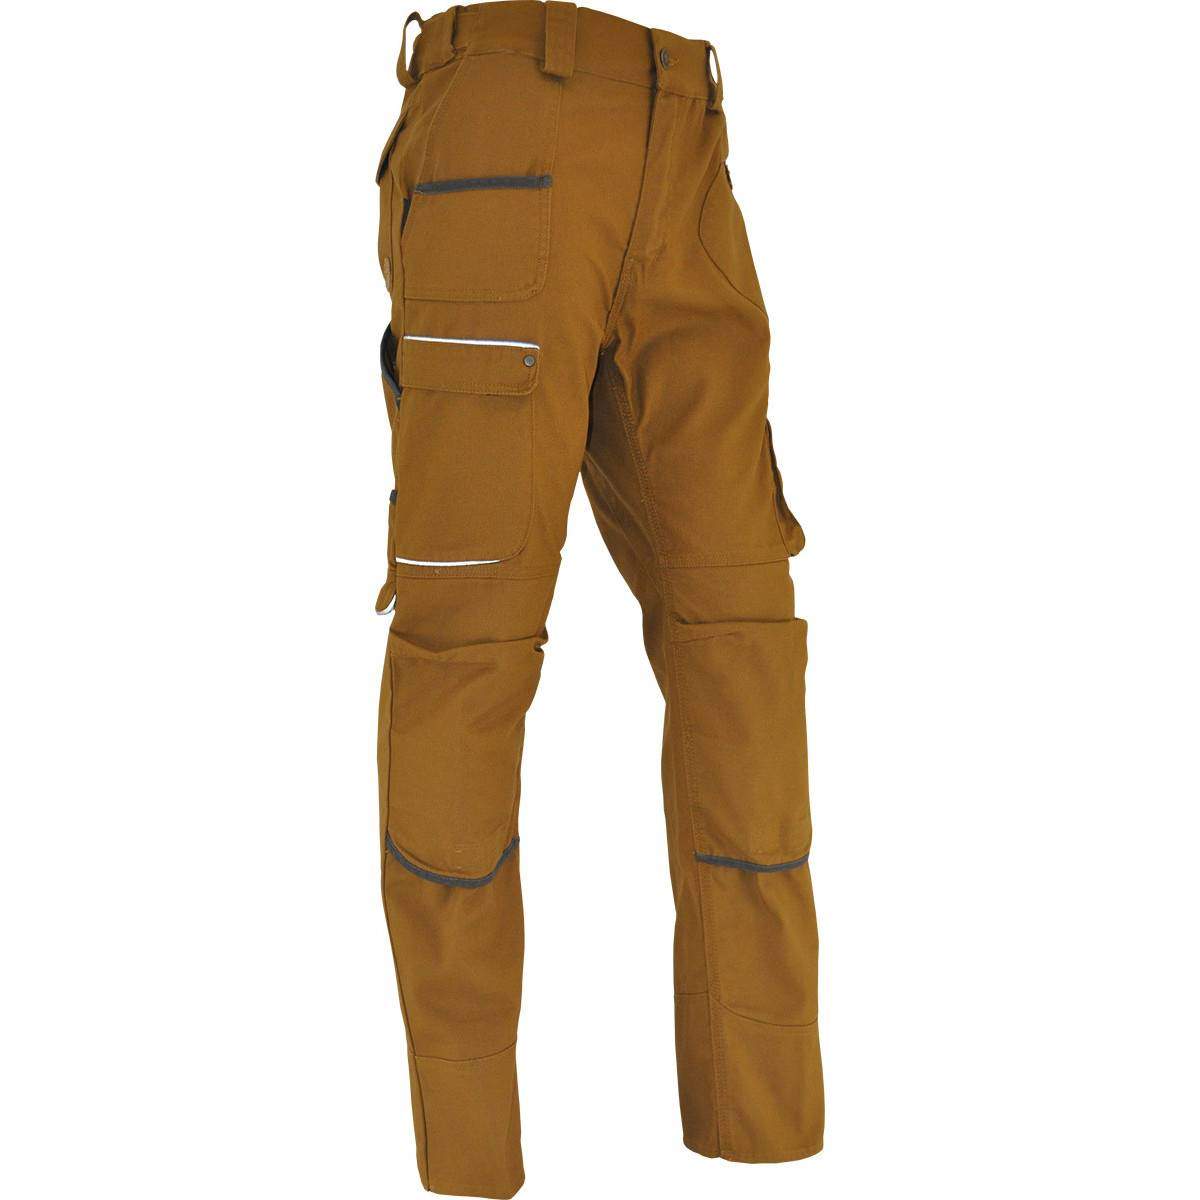 Pantalones de trabajo SAHARA talla 40, bronce